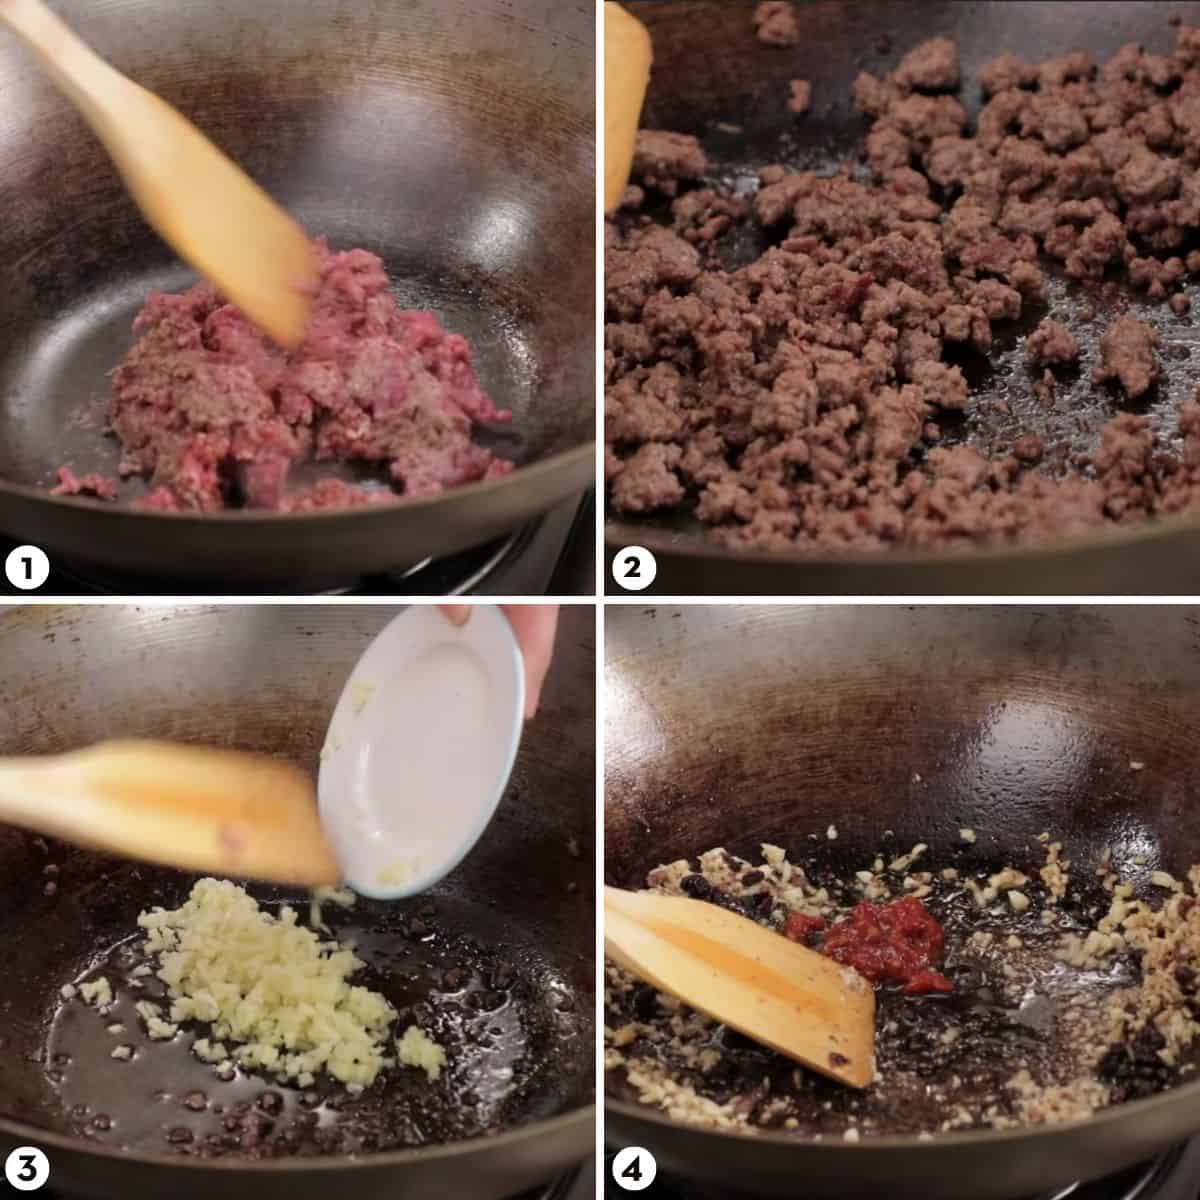 Process shots for making mapo tofu, steps 1-4